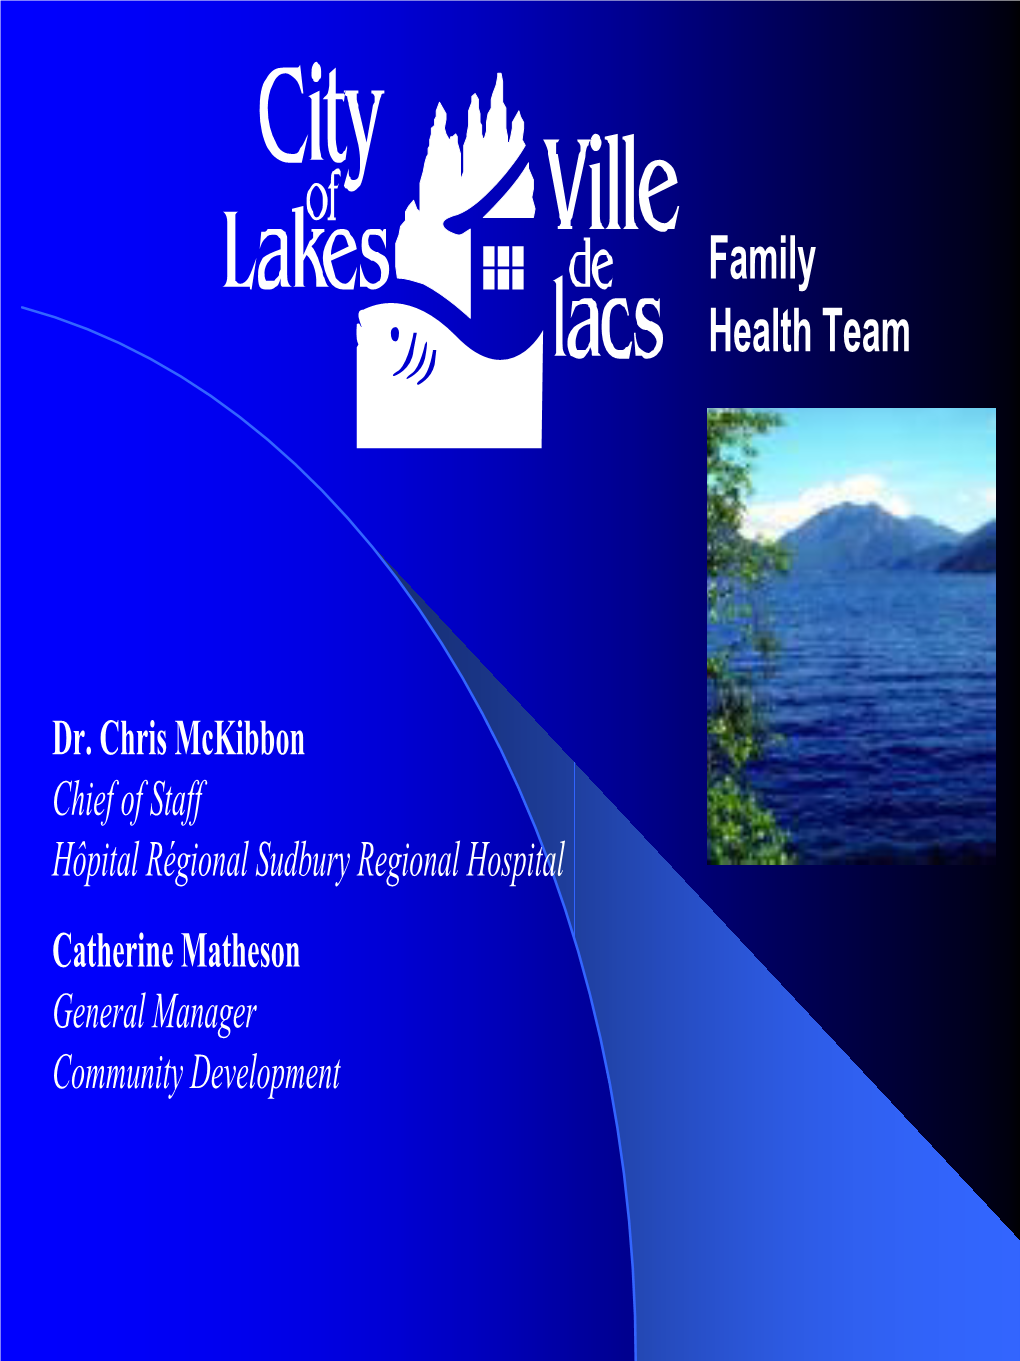 City of Lakes Family Health Team